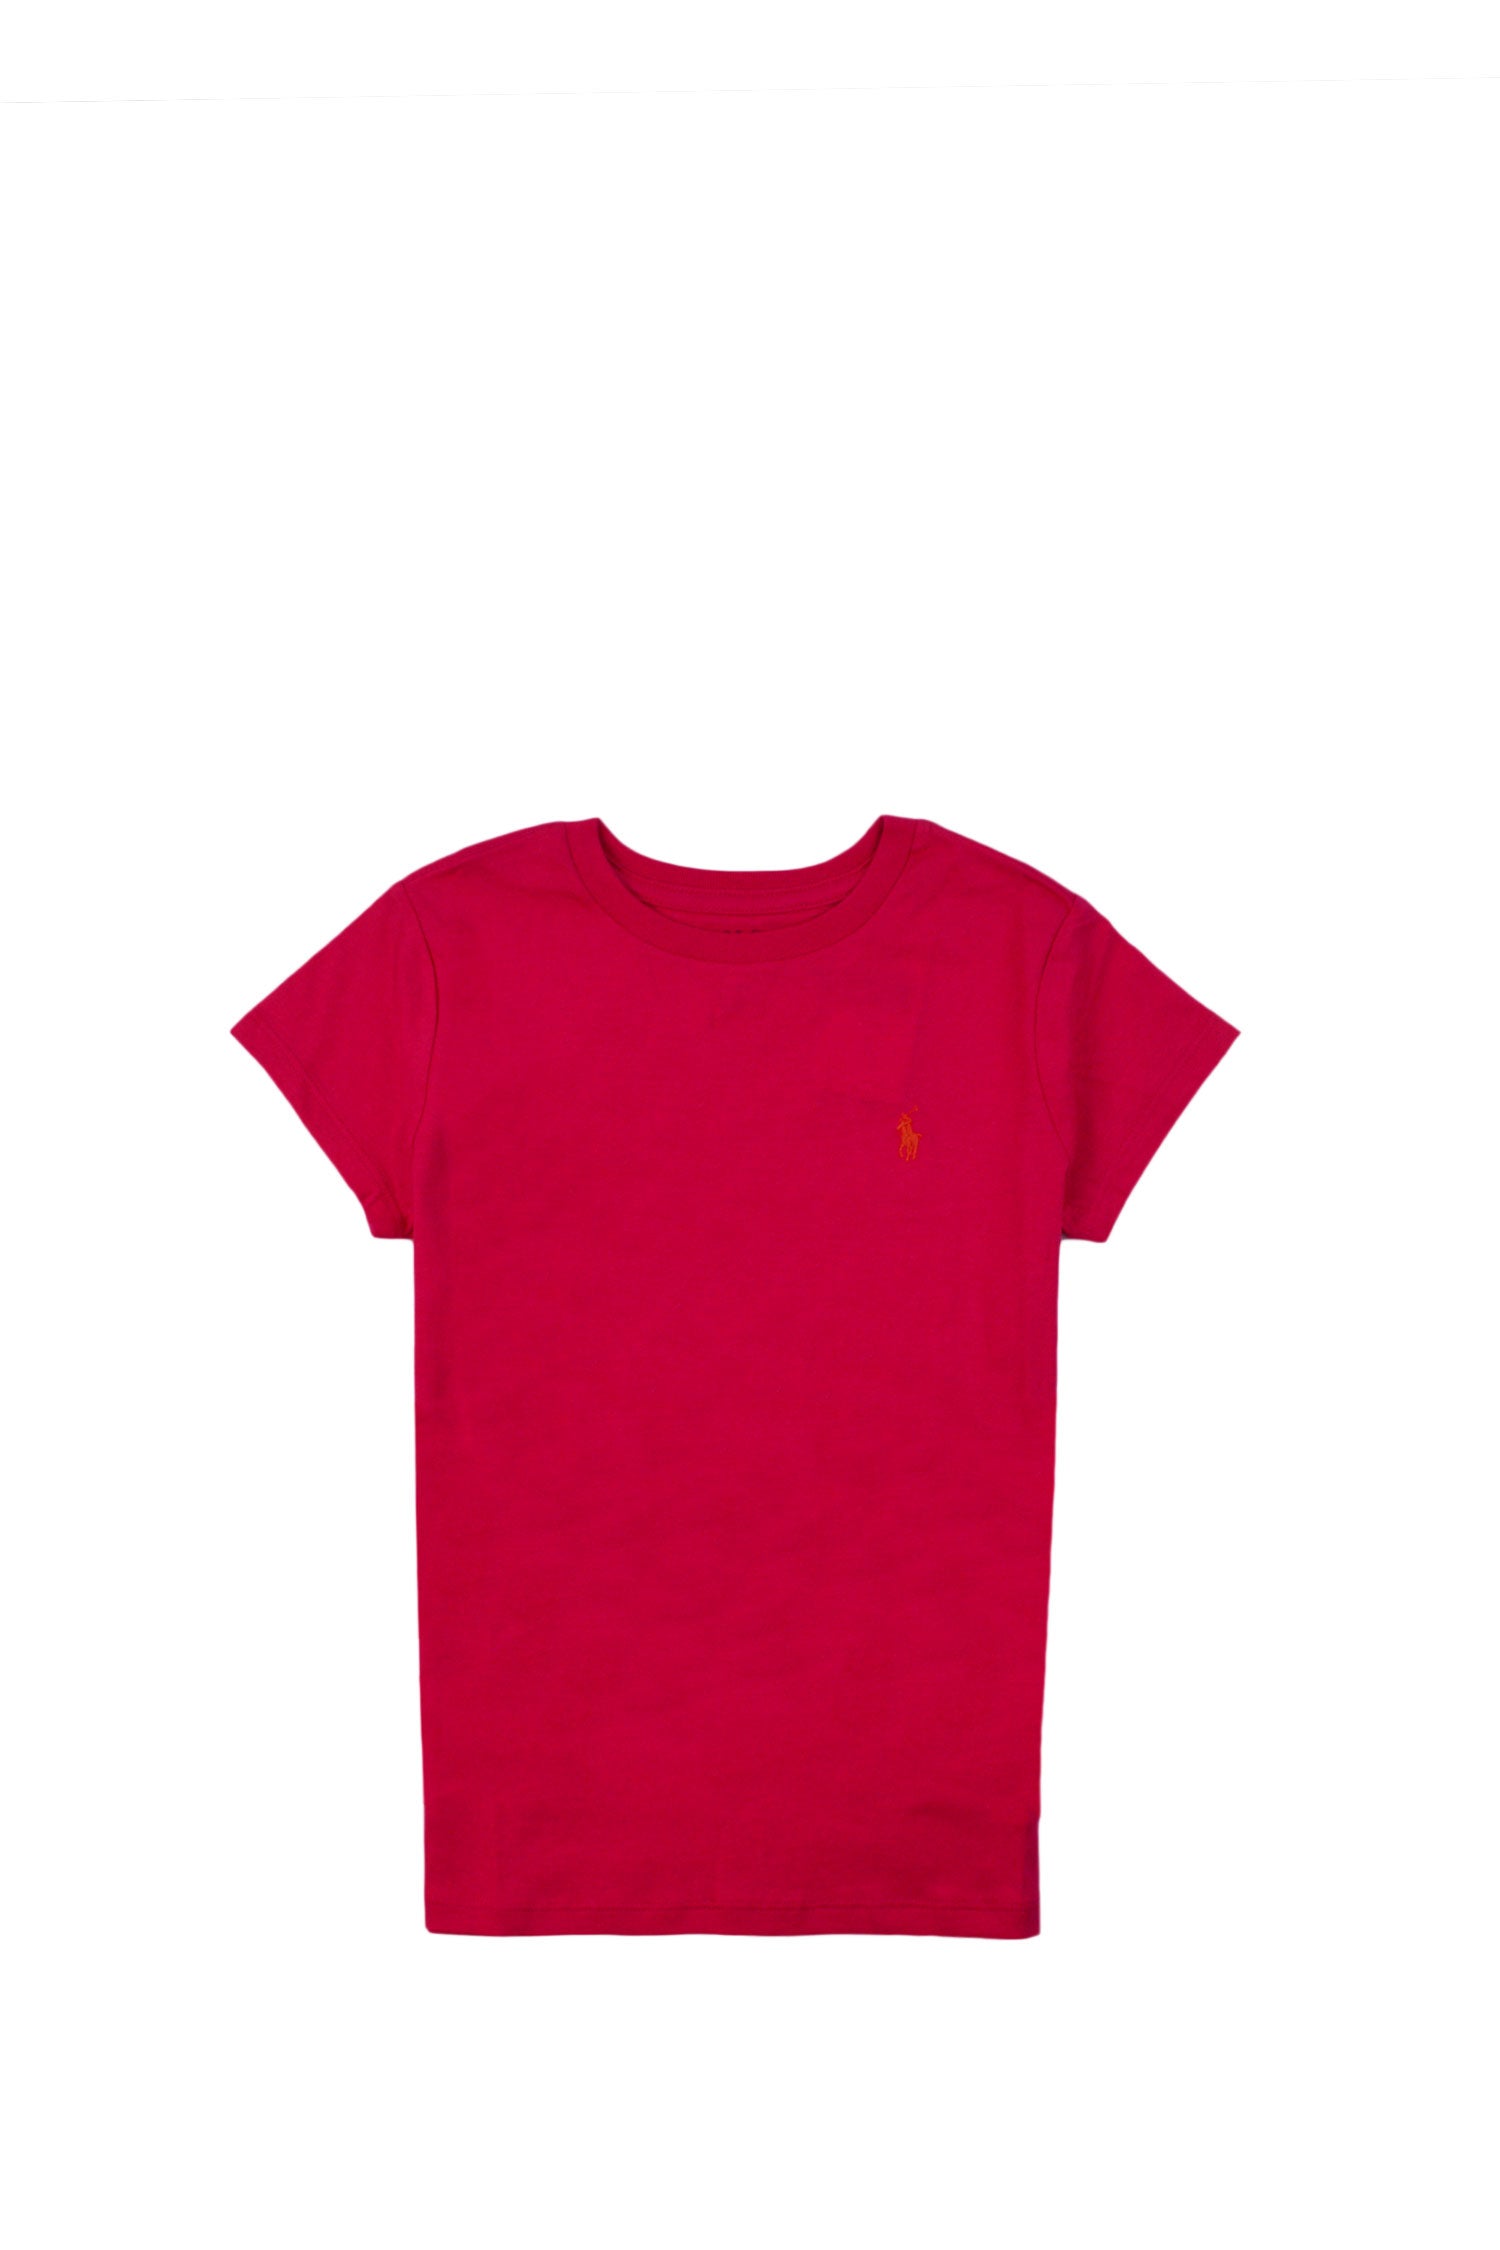 T-shirt rosa con logo frontale